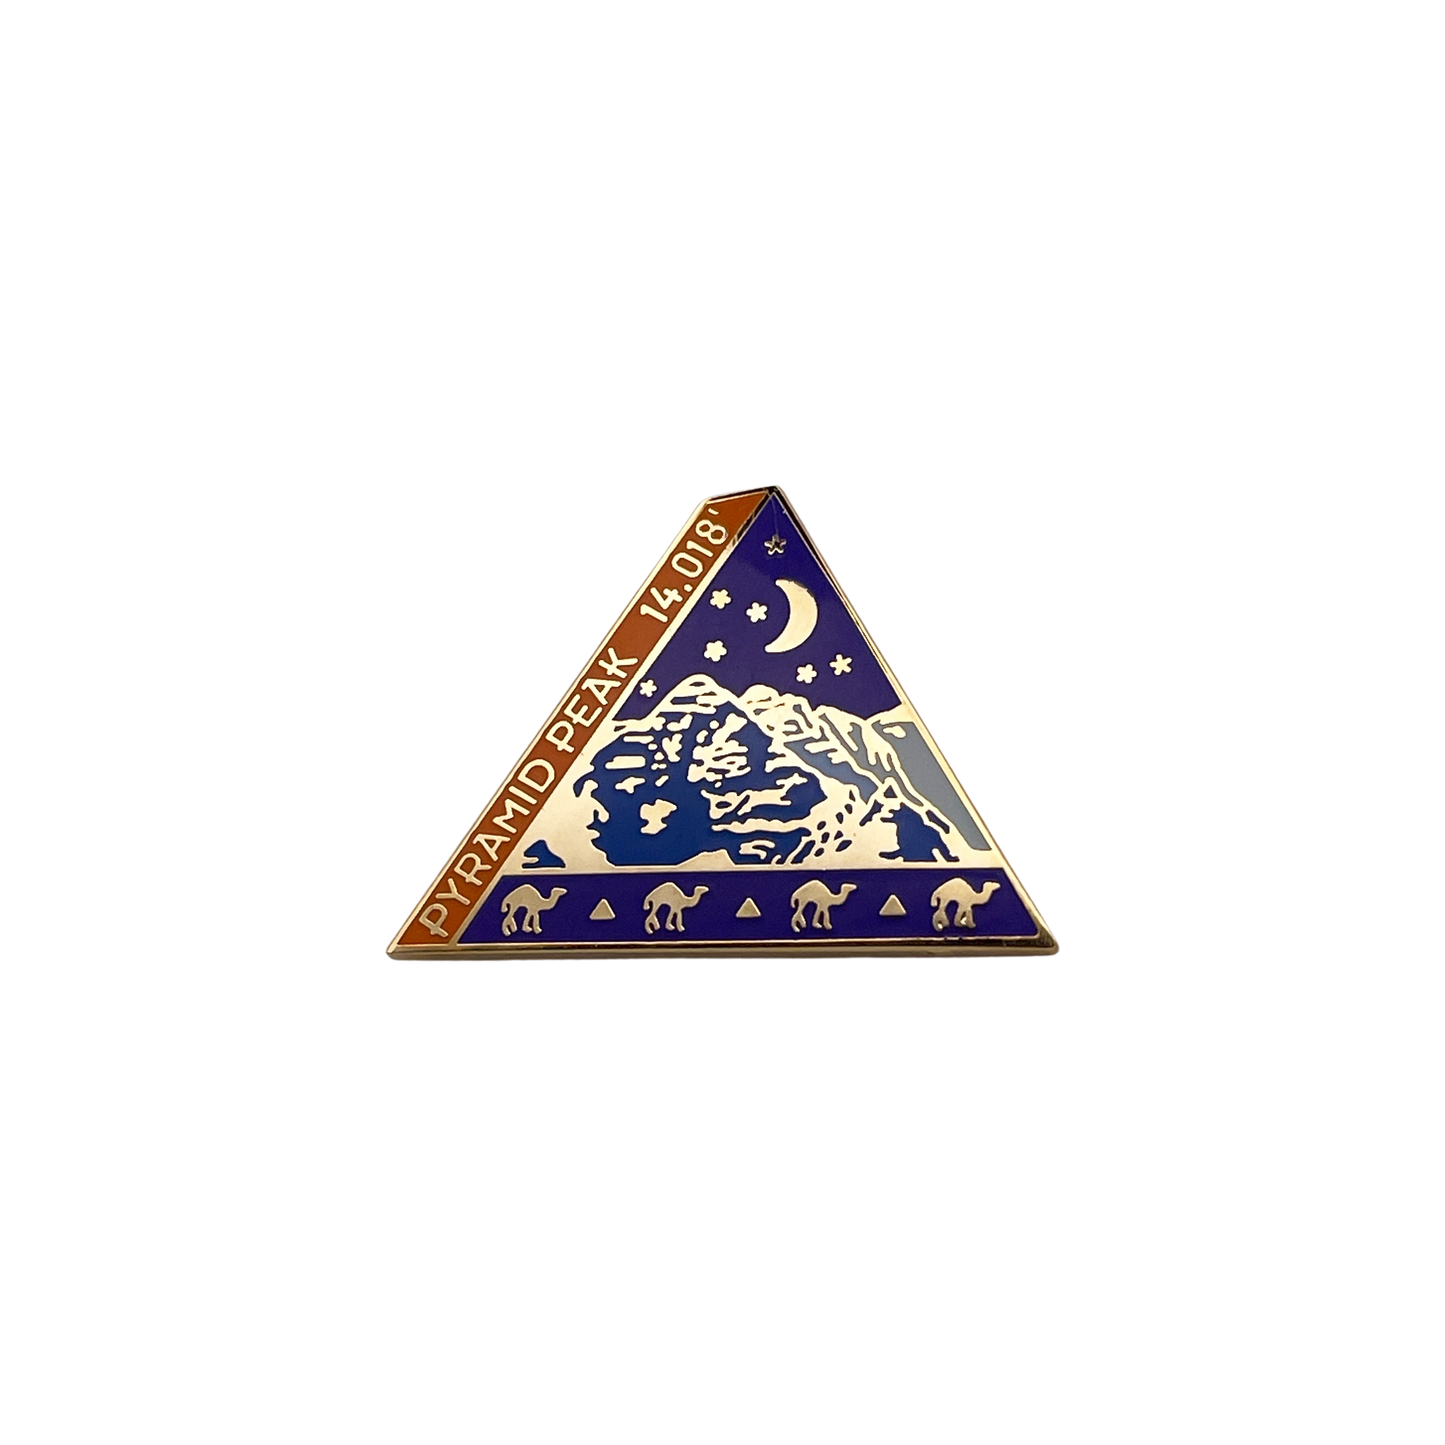 Pyramid Peak Pin